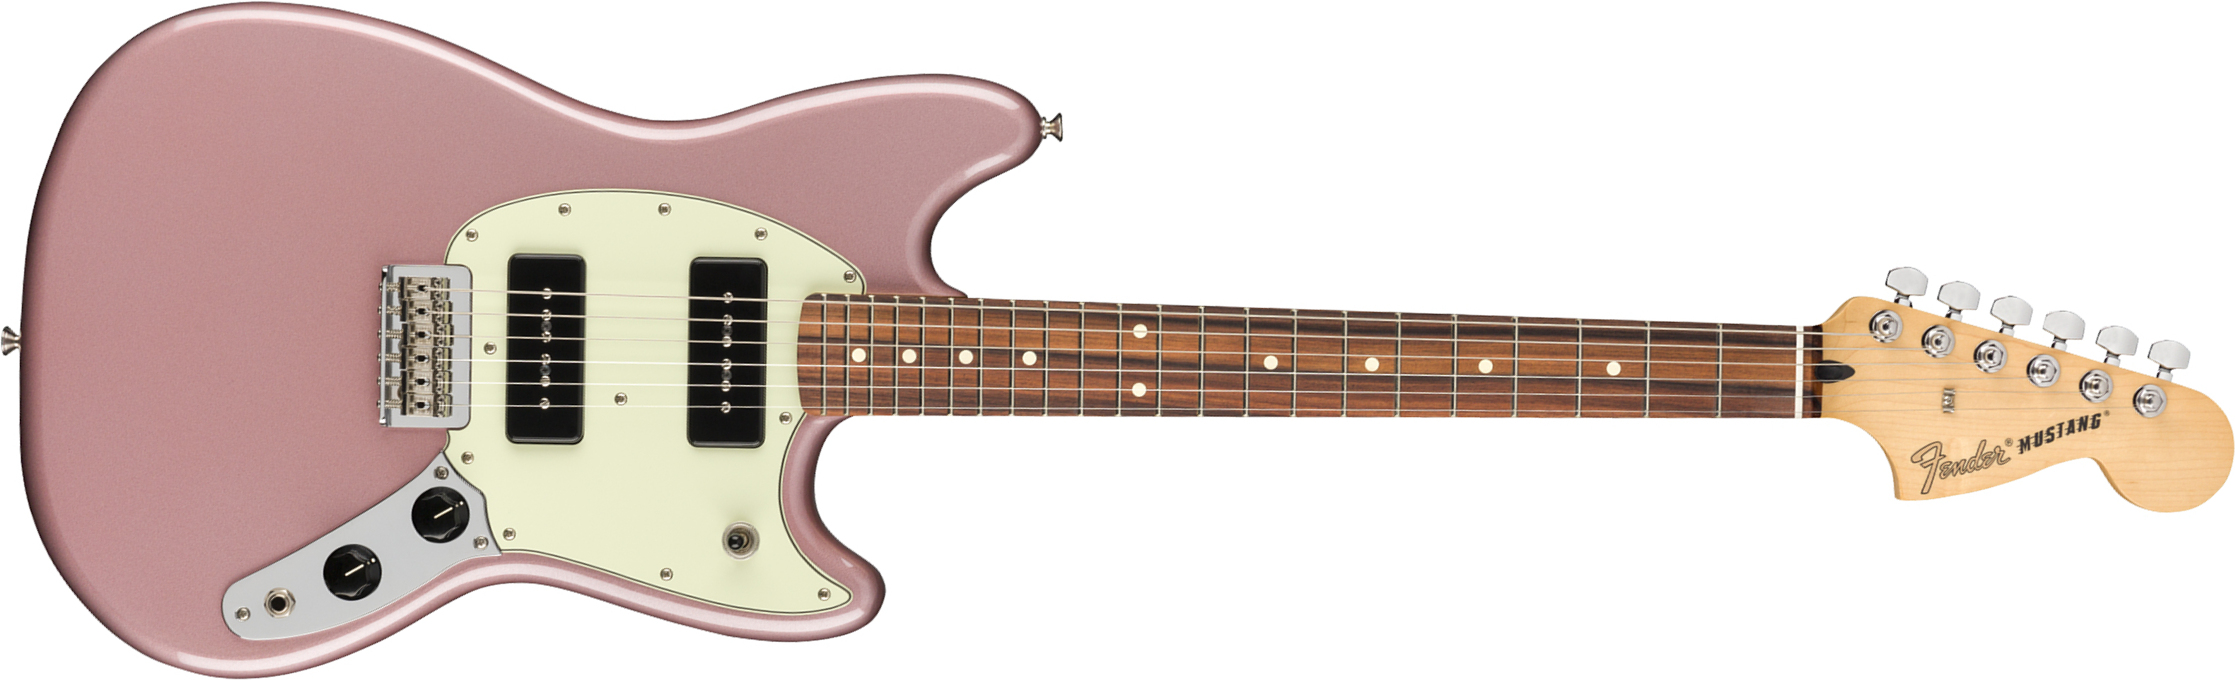 Fender Mustang Player 90 Mex Ht 2p90 Pf - Burgundy Mist Metallic - Retro-Rock-E-Gitarre - Main picture